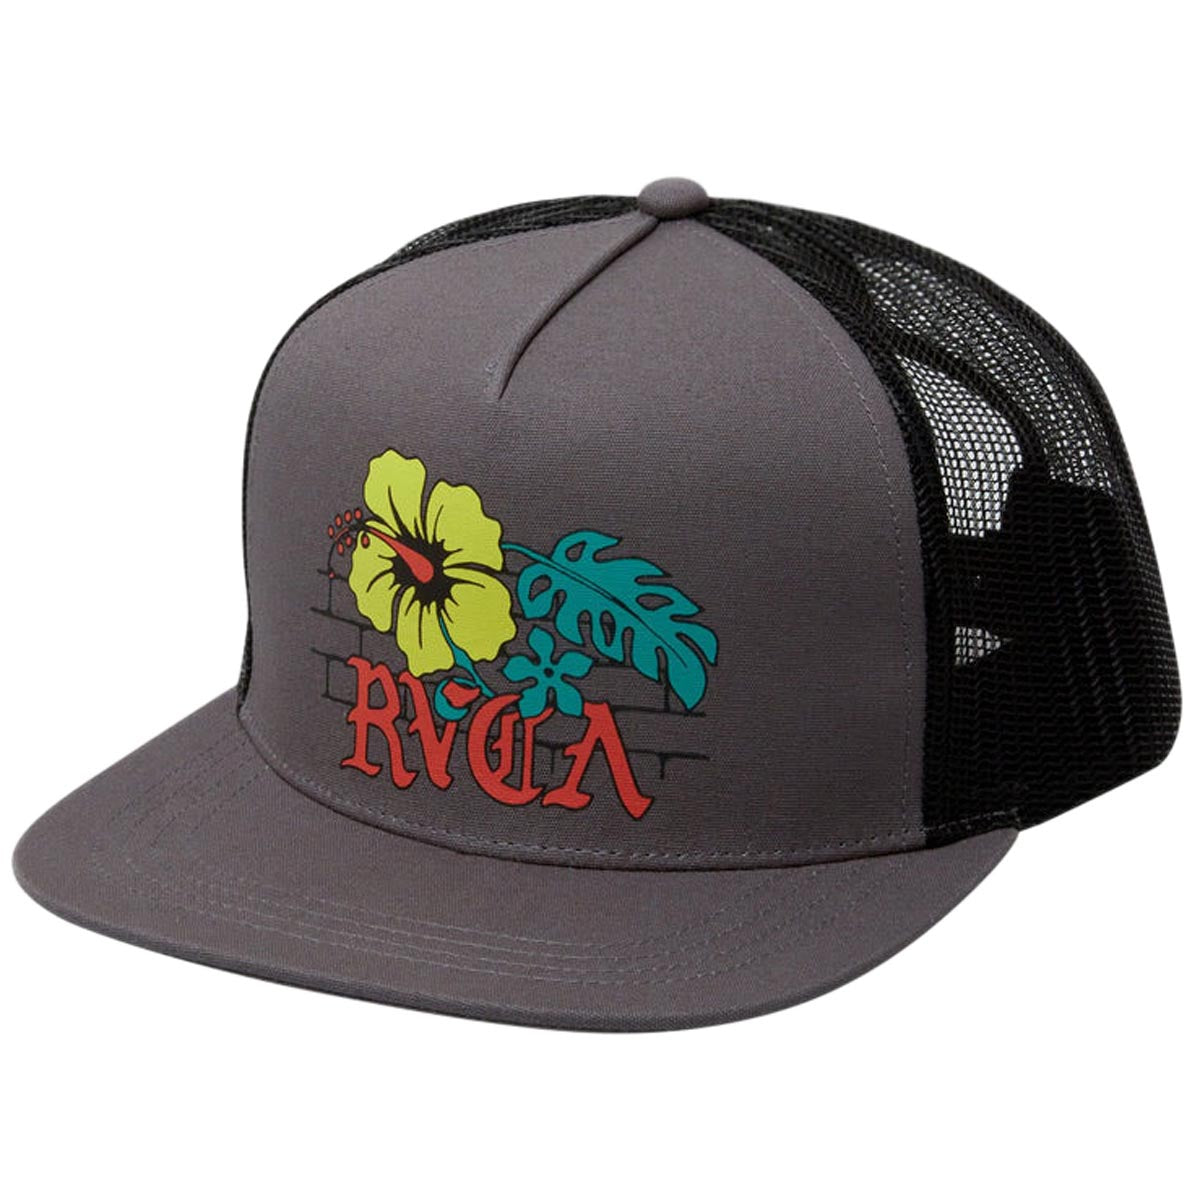 RVCA Floral Park Trucker Hat - Dark Grey image 1